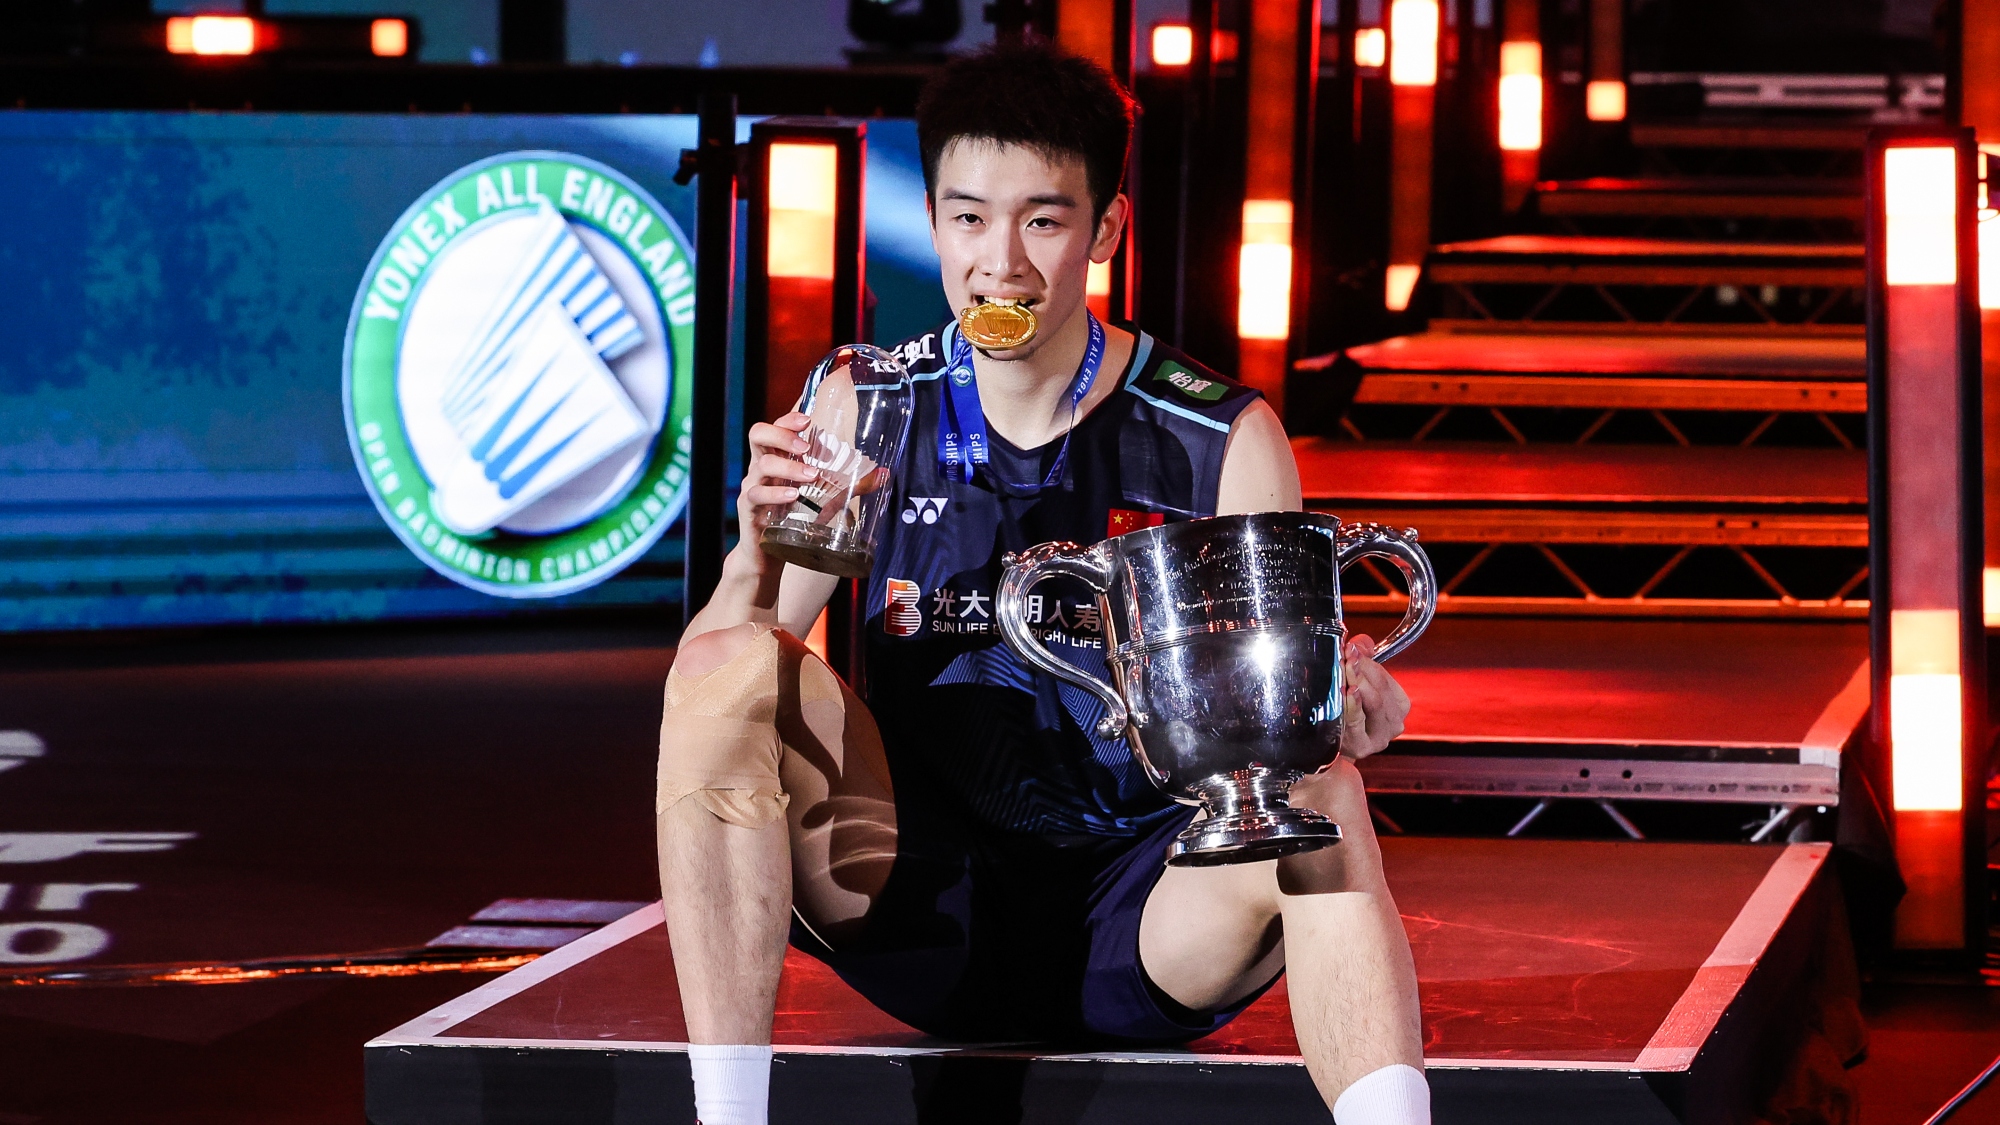 Li Shi Feng emulates hero Lin Dan by winning YONEX All England All England Badminton